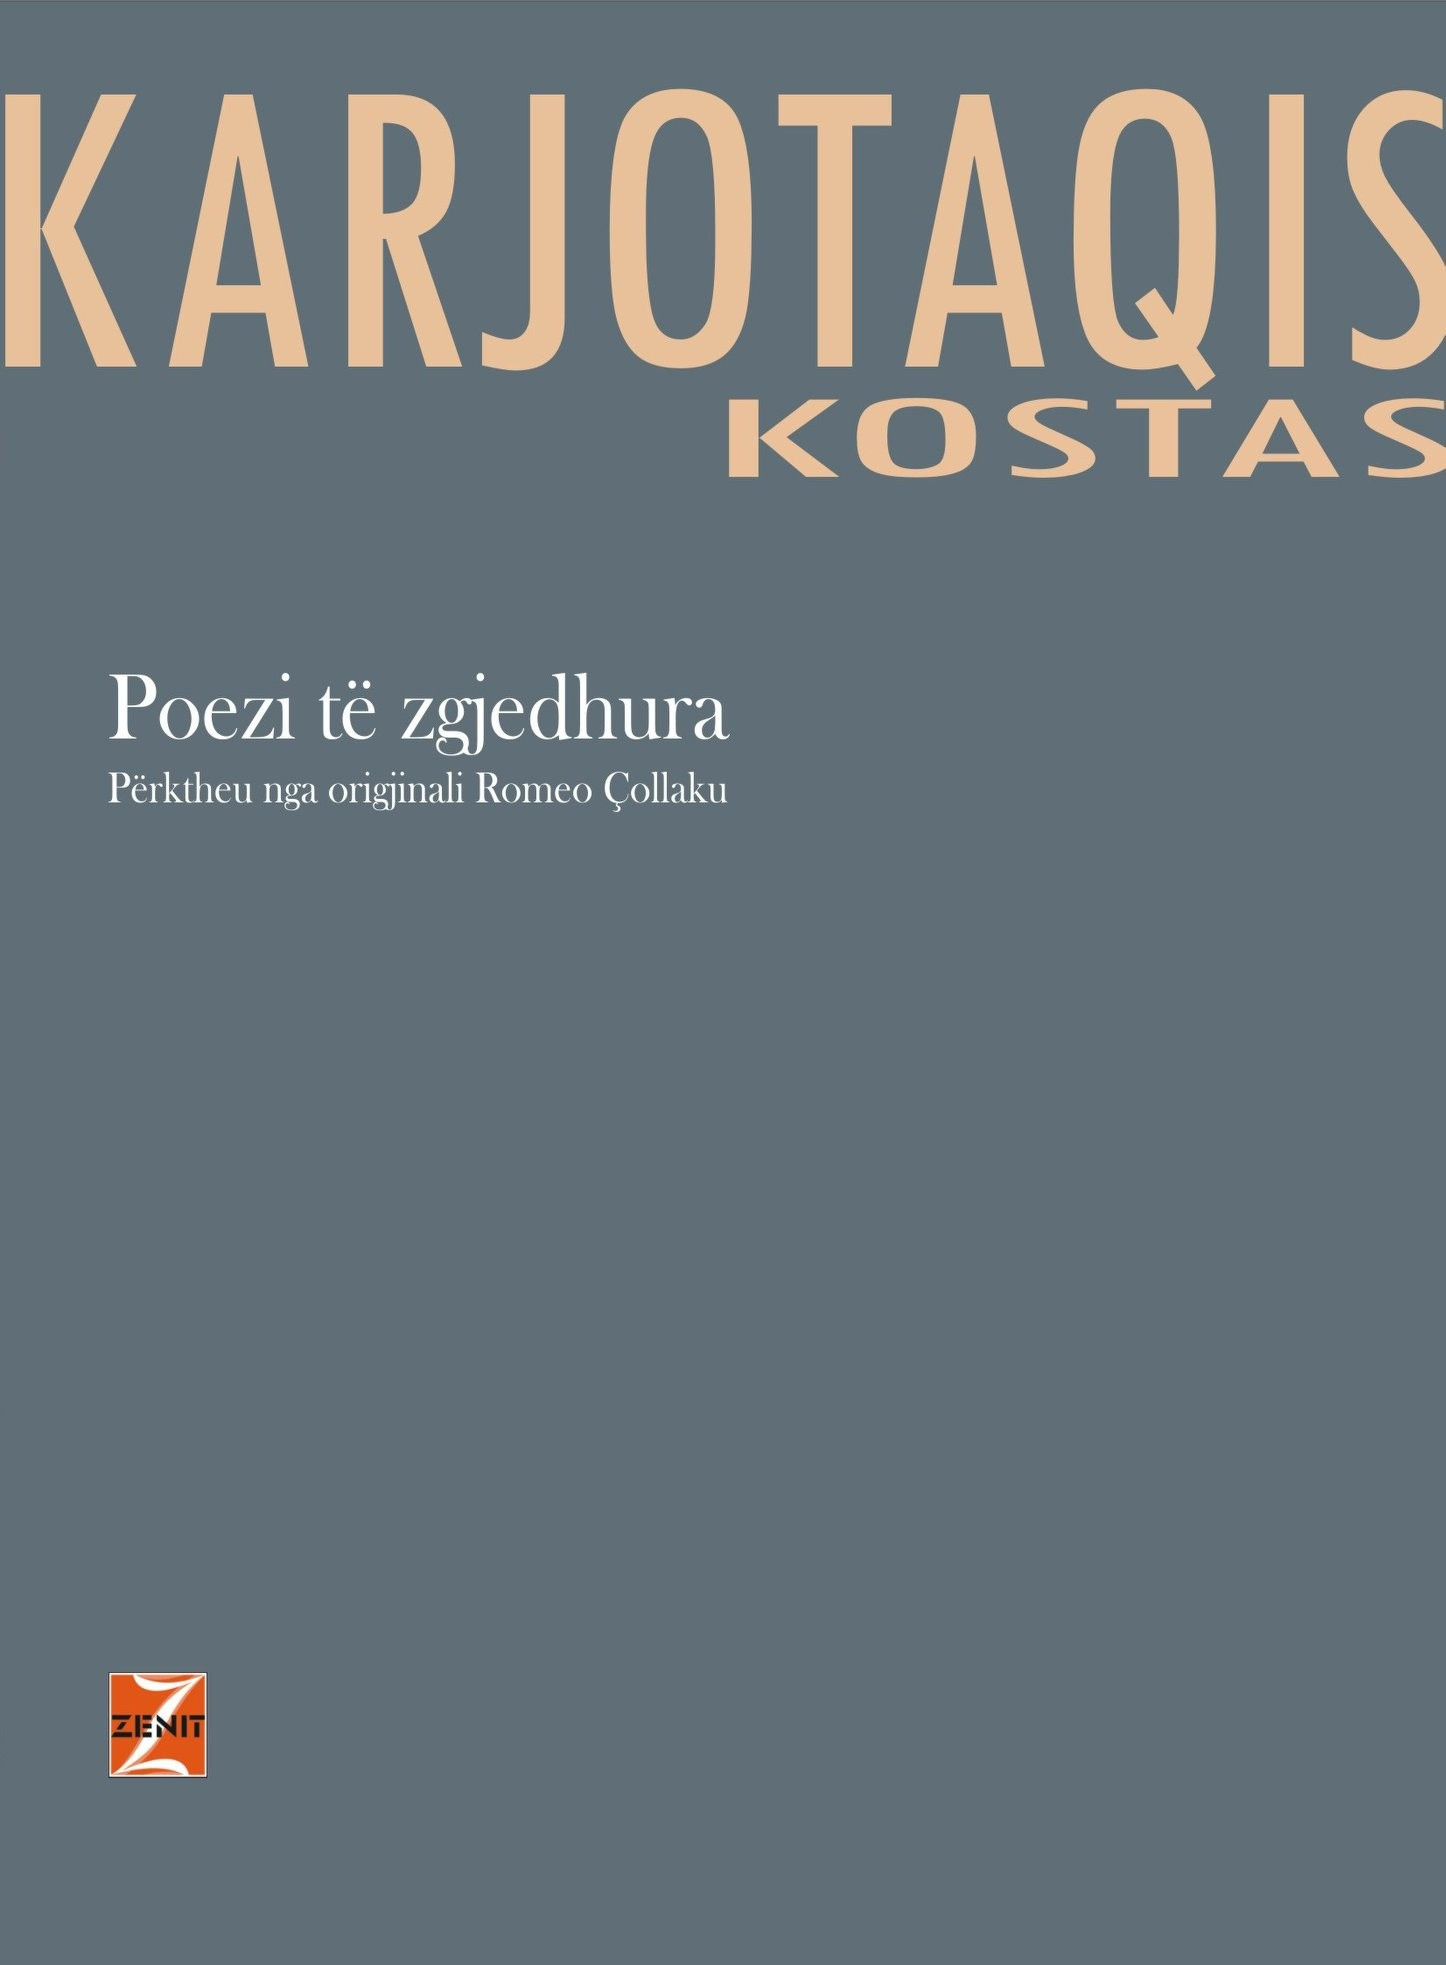 Kostas Karjotaqis - Poezi të zgjedhura